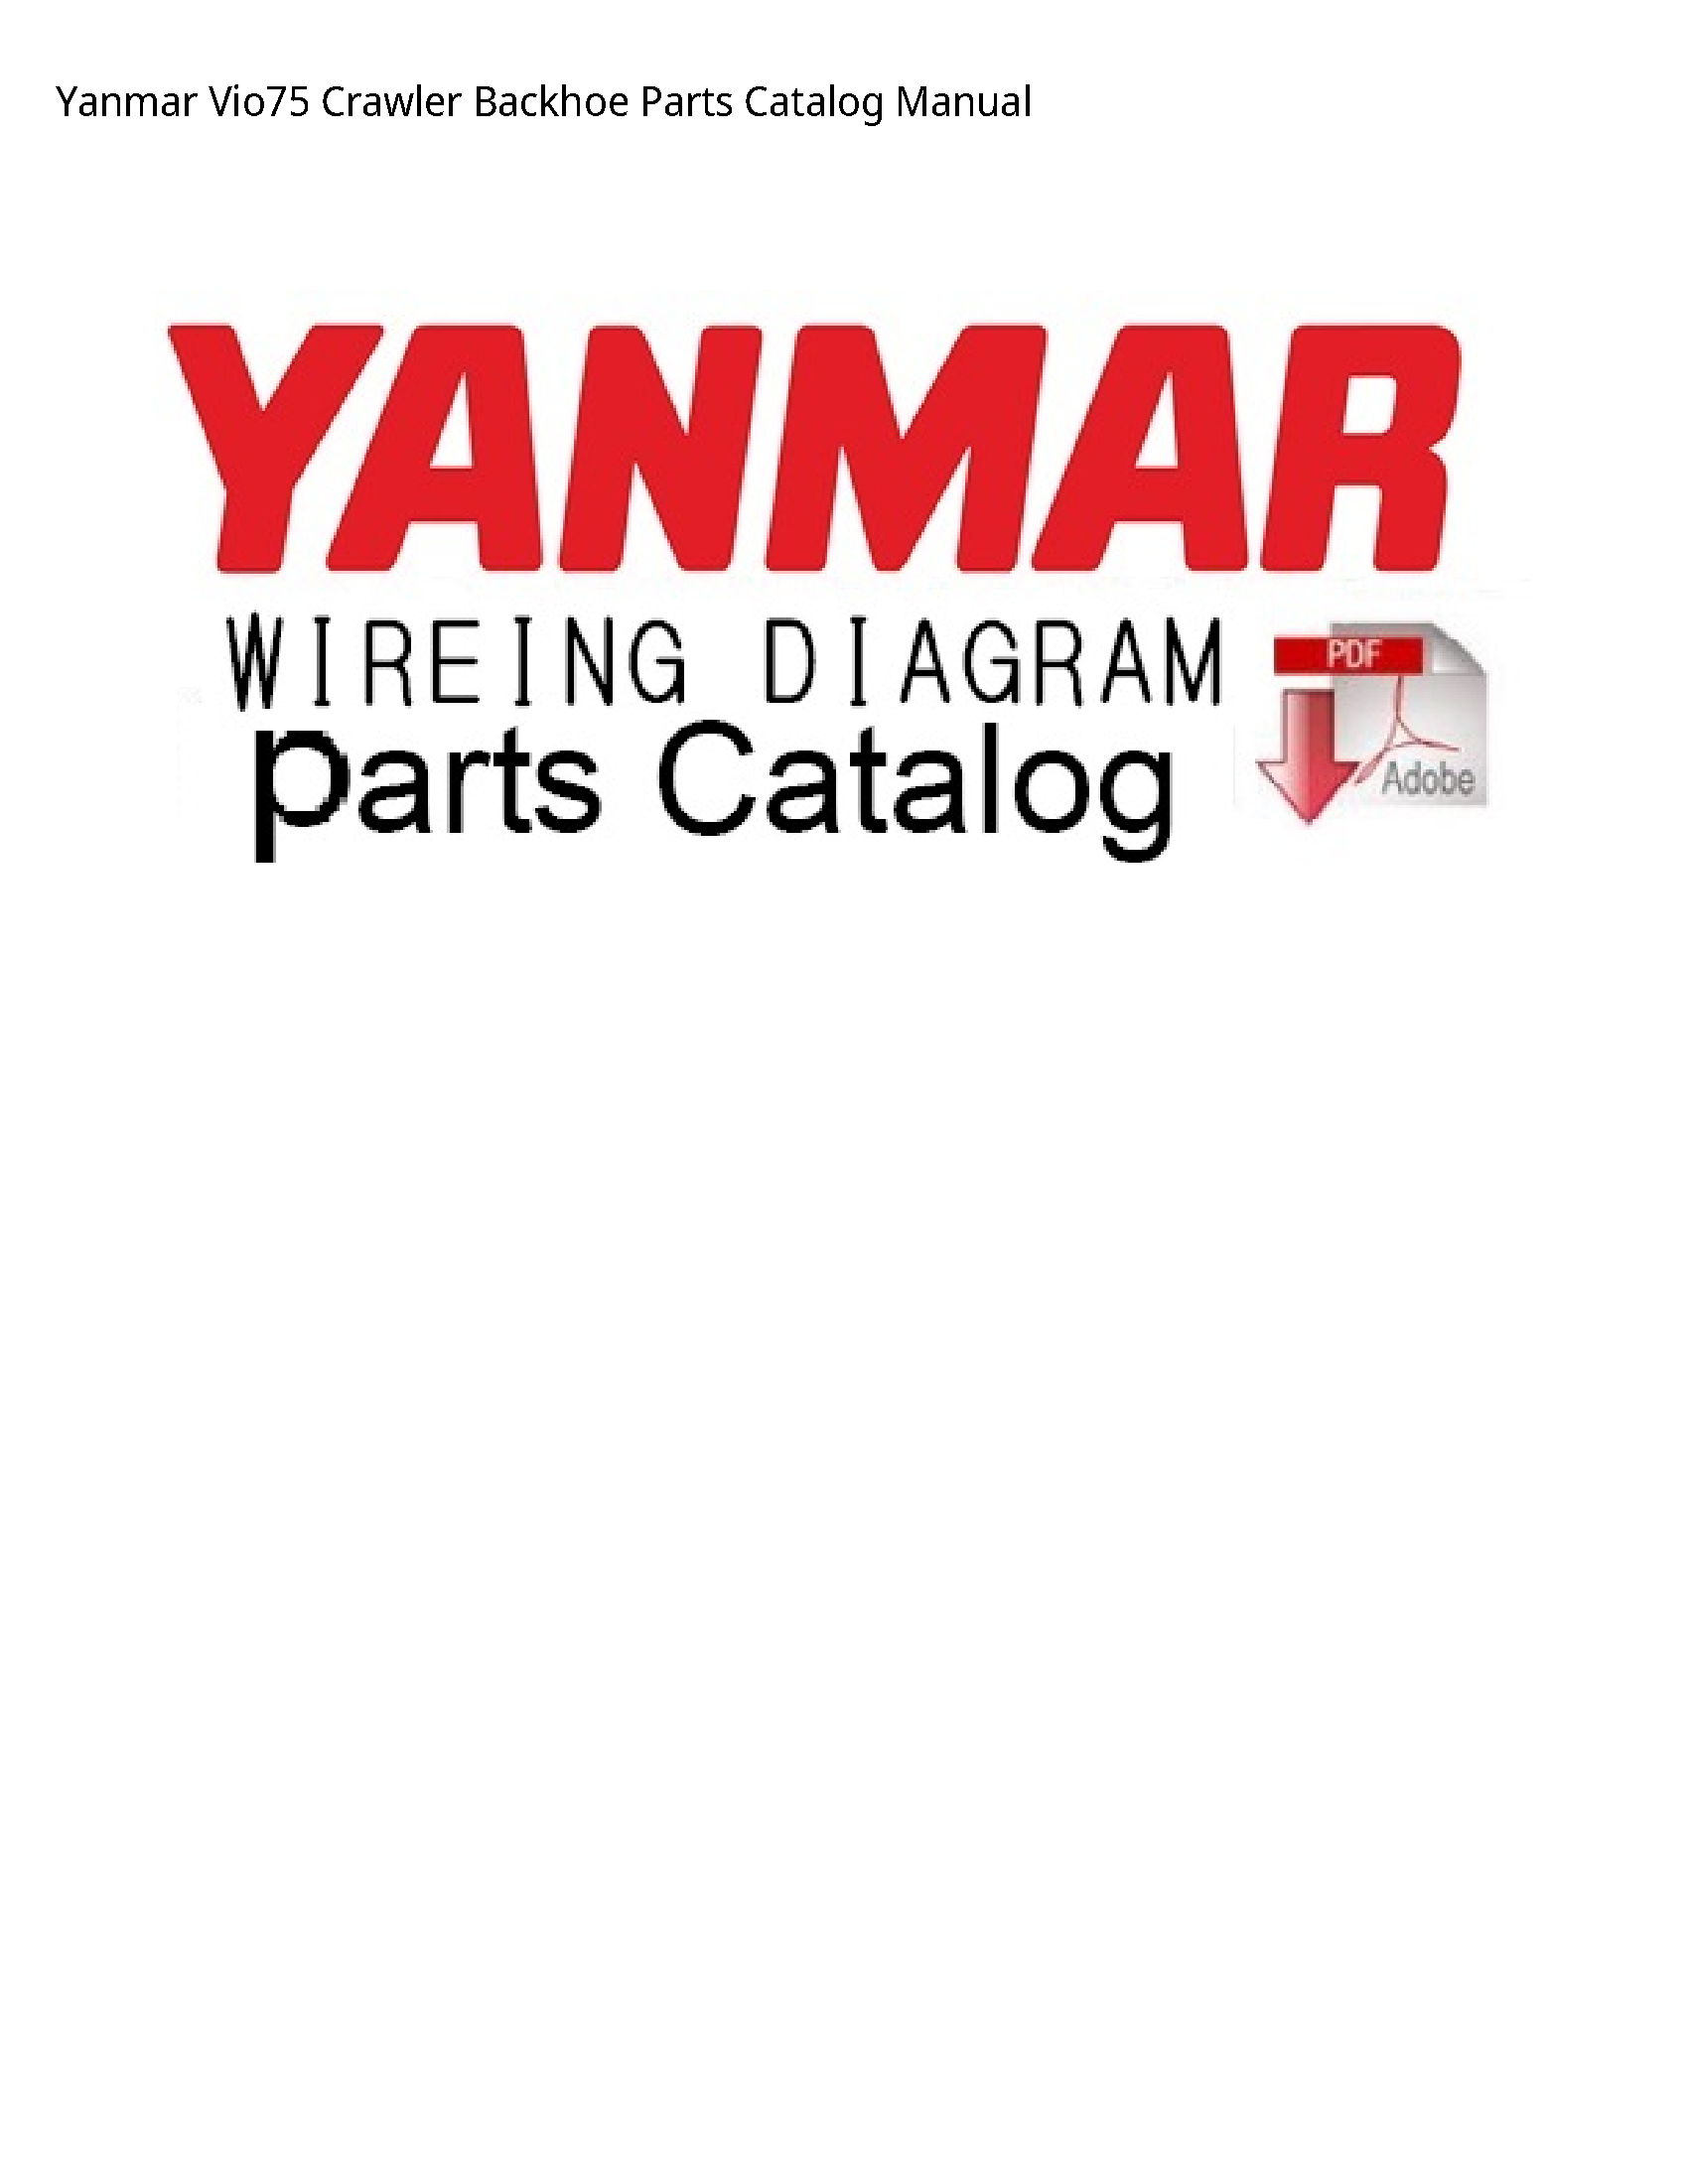 Yanmar Vio75 Crawler Backhoe Parts Catalog manual